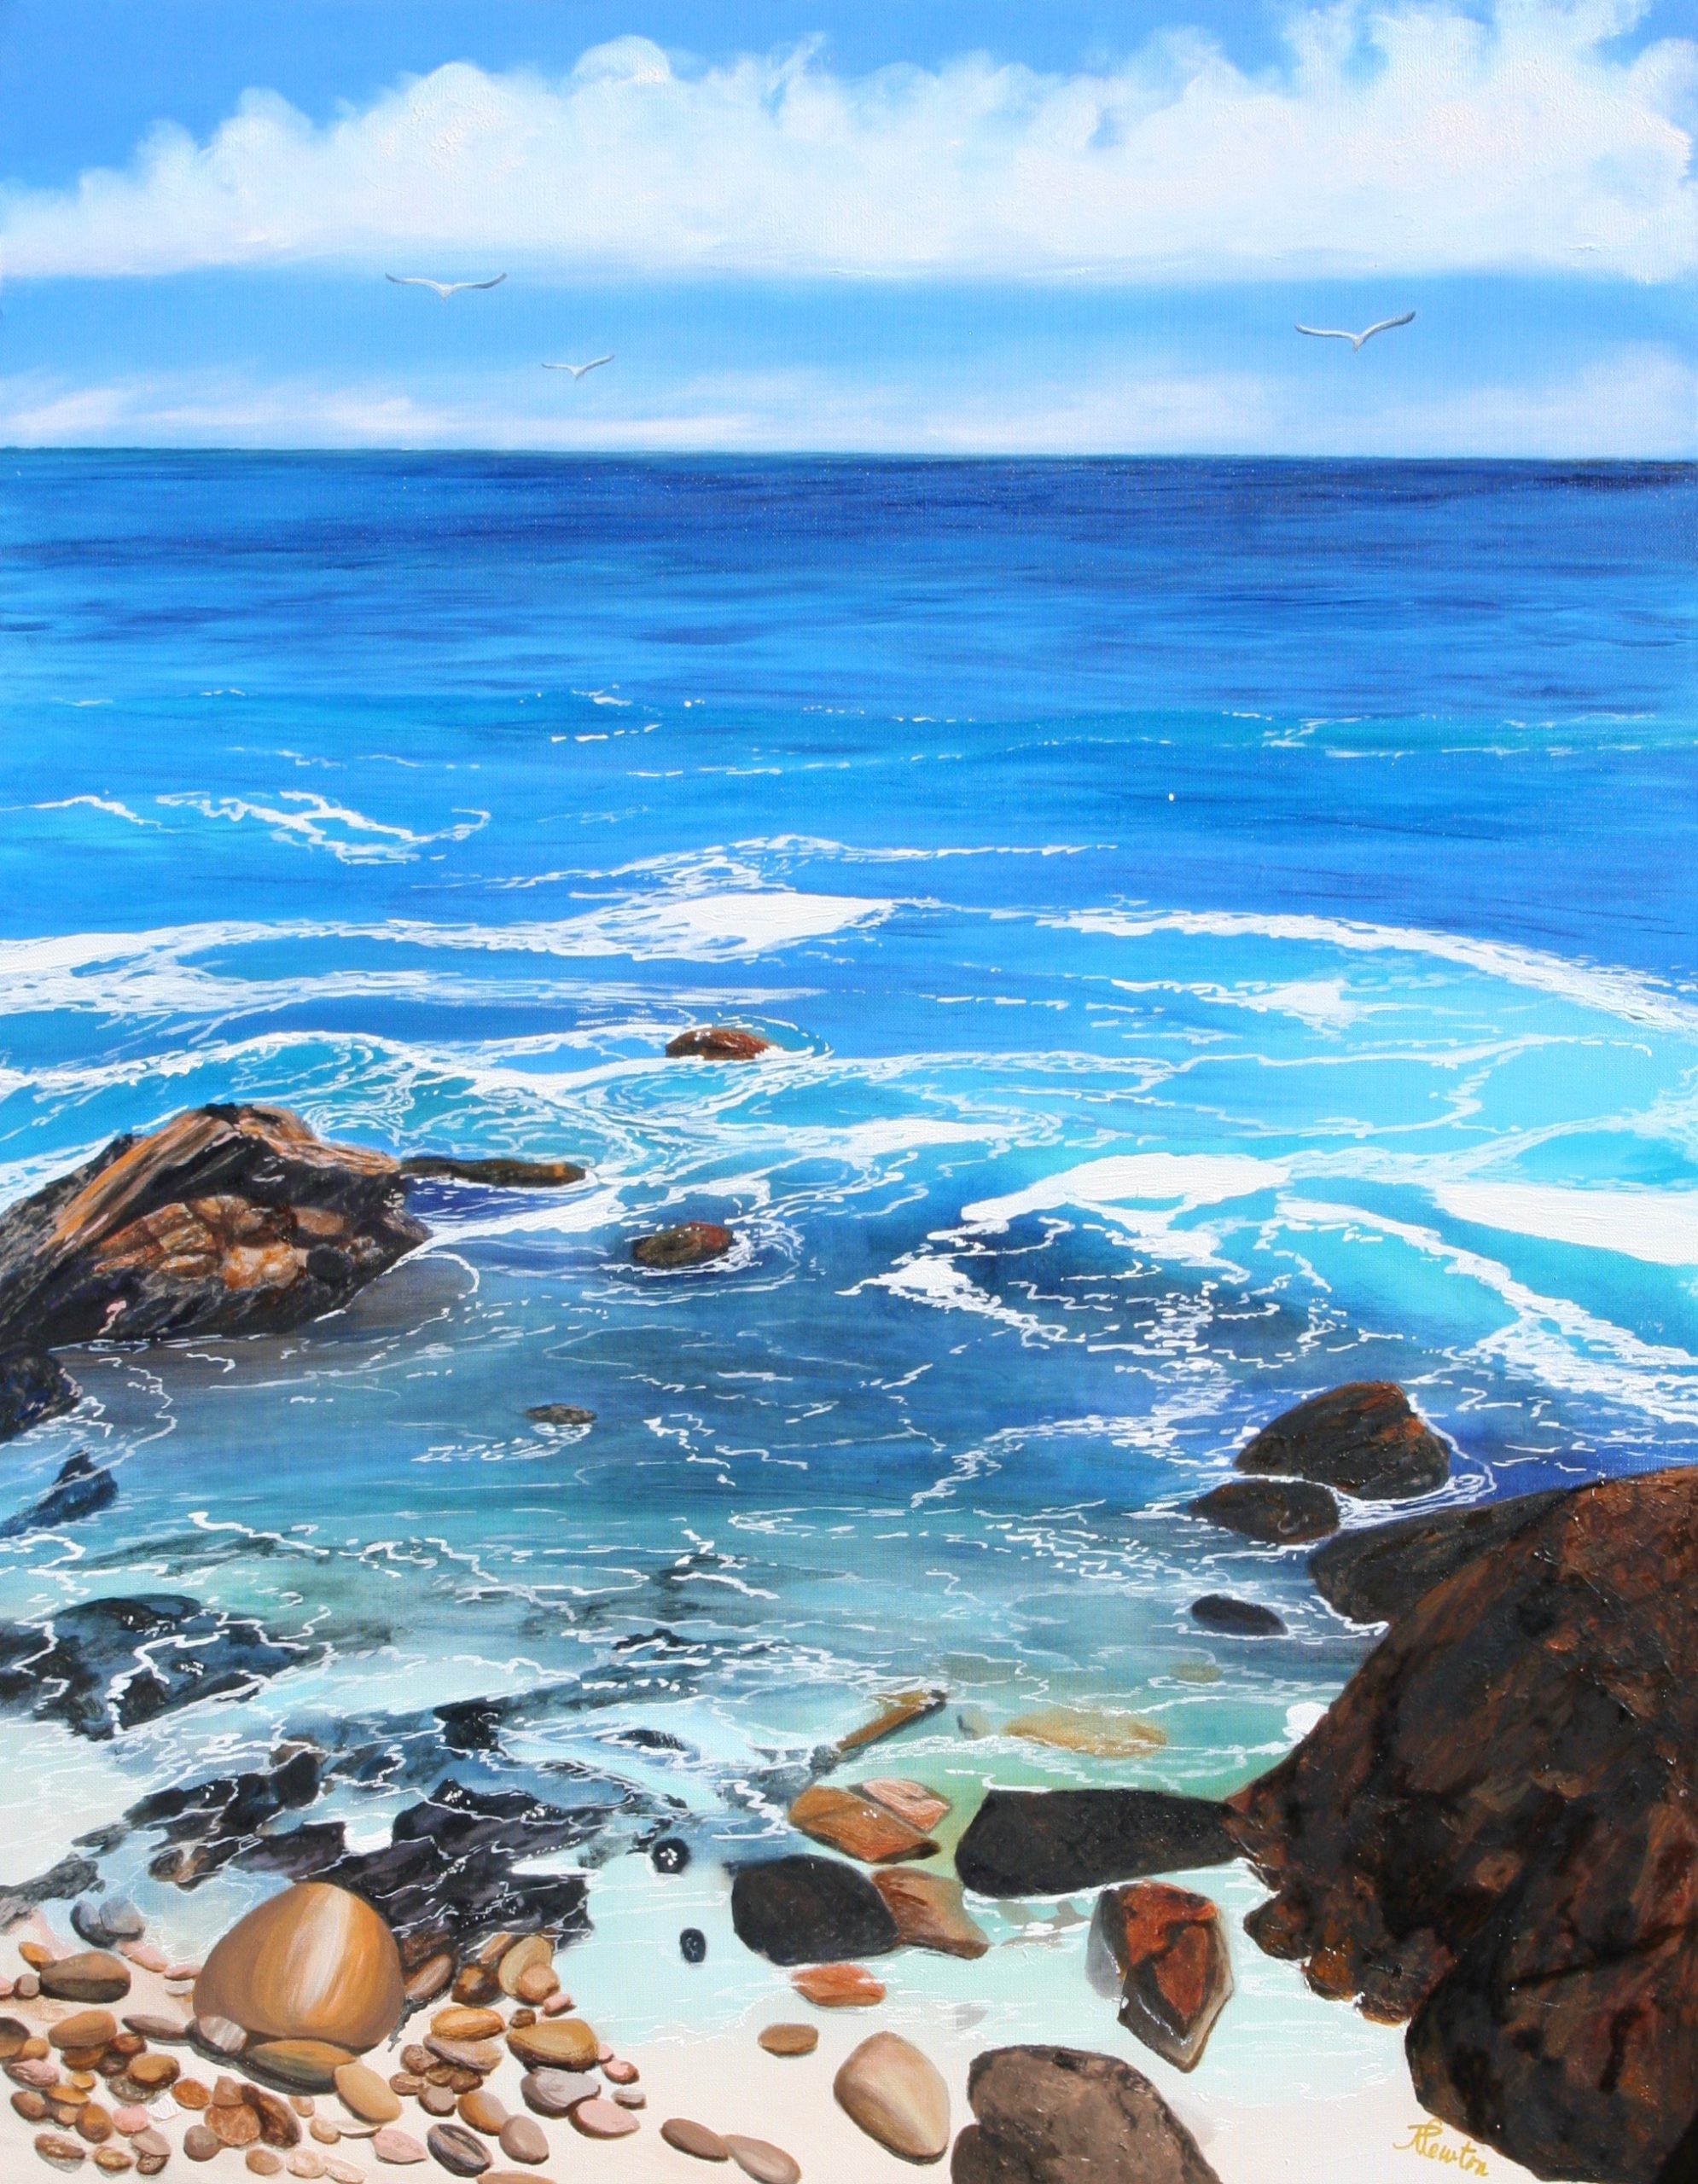 Edge of the Sea, Oil on Silk Canvas $800.